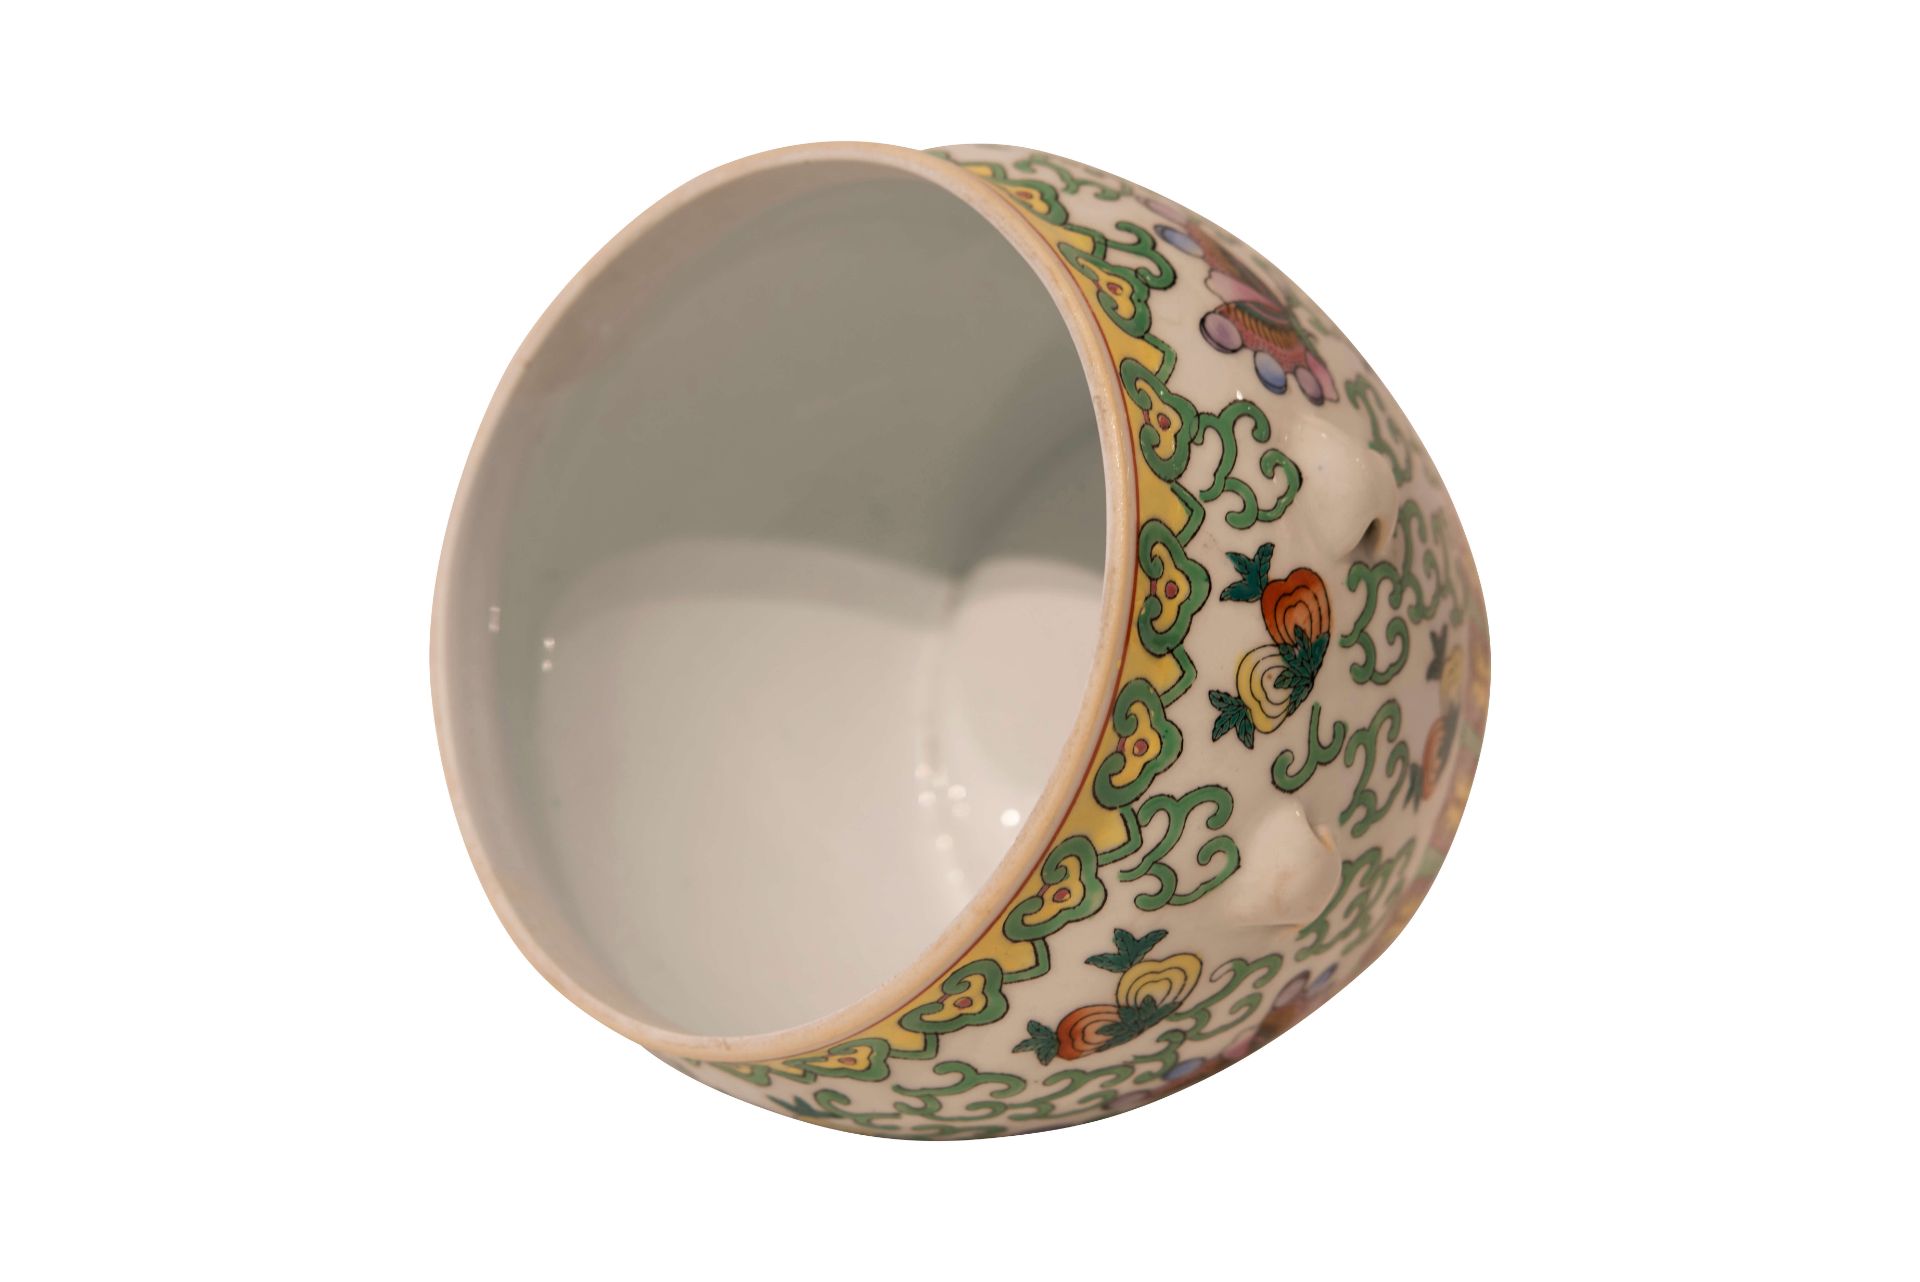 Handbemalter bunter Asiatischer Keramik Topf | Colorful Hand Painted Asian Ceramic Pot - Image 5 of 5